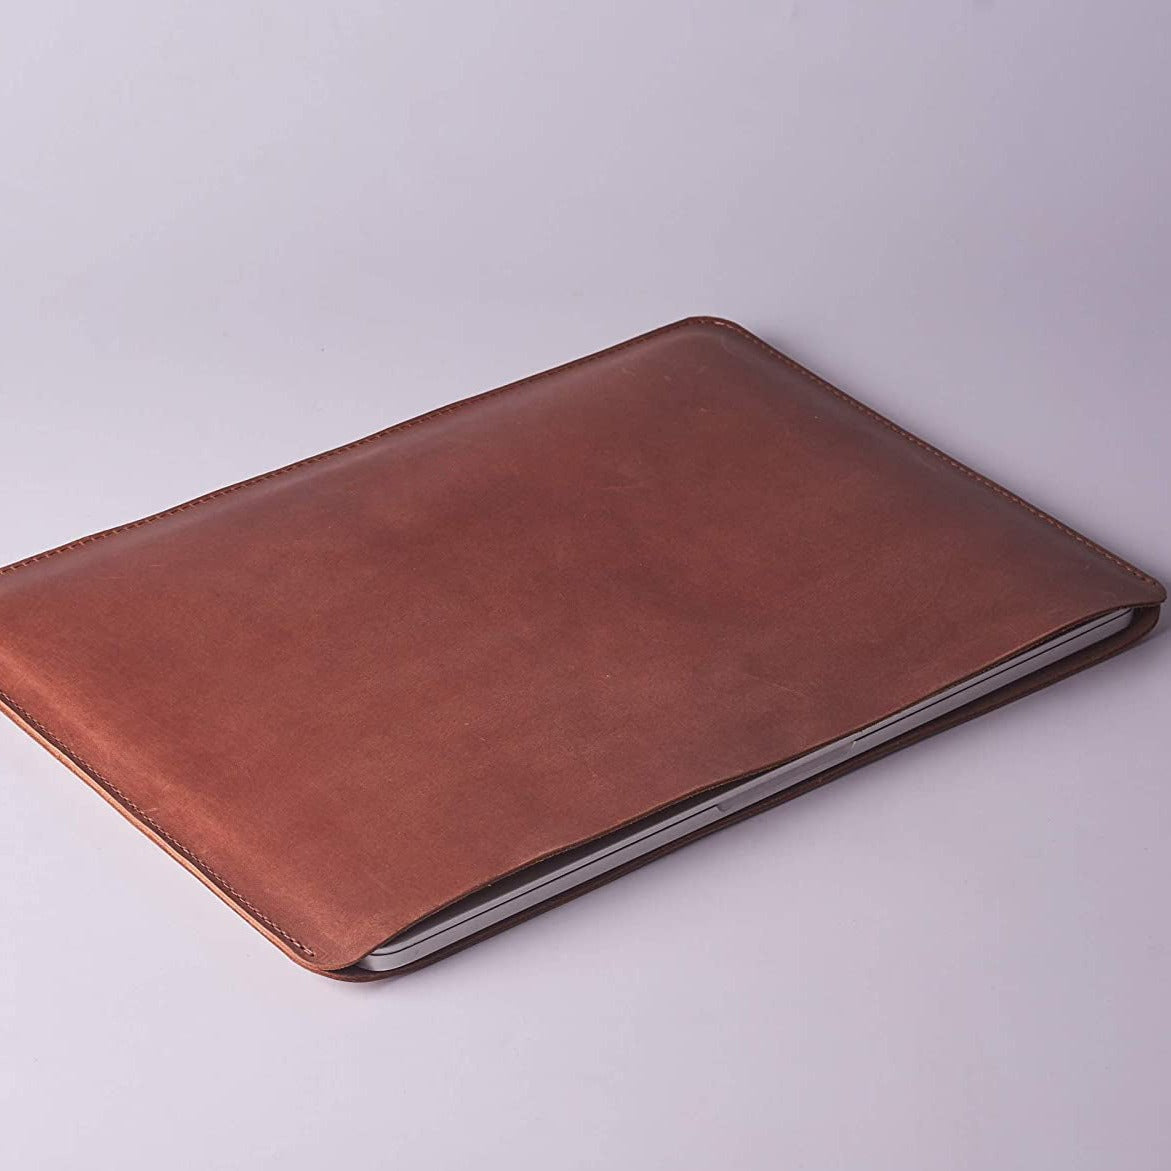 Mac air 2021 case Leather